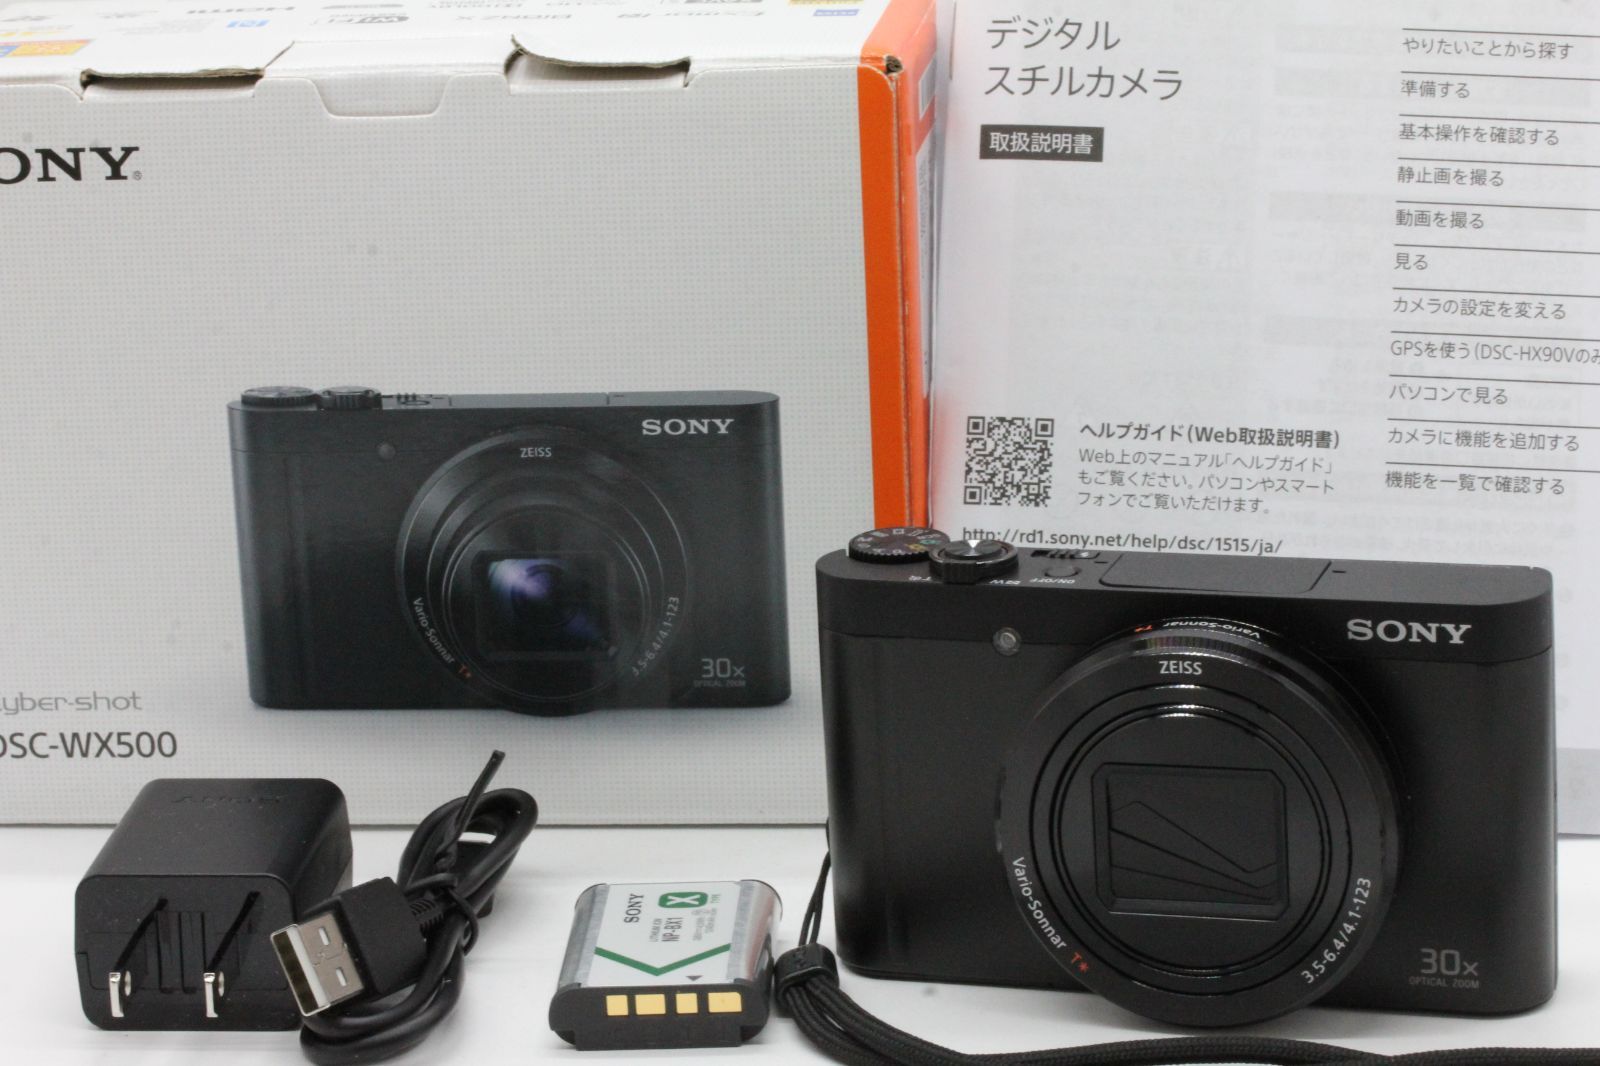 SONY ソニー コンパクトデジタルカメラ Cyber-shot DSC-WX500 ブラック 光学ズーム30倍(24-720mm)  180度可動式液晶モニター - PitchCam ?インボイス登録済 - メルカリ